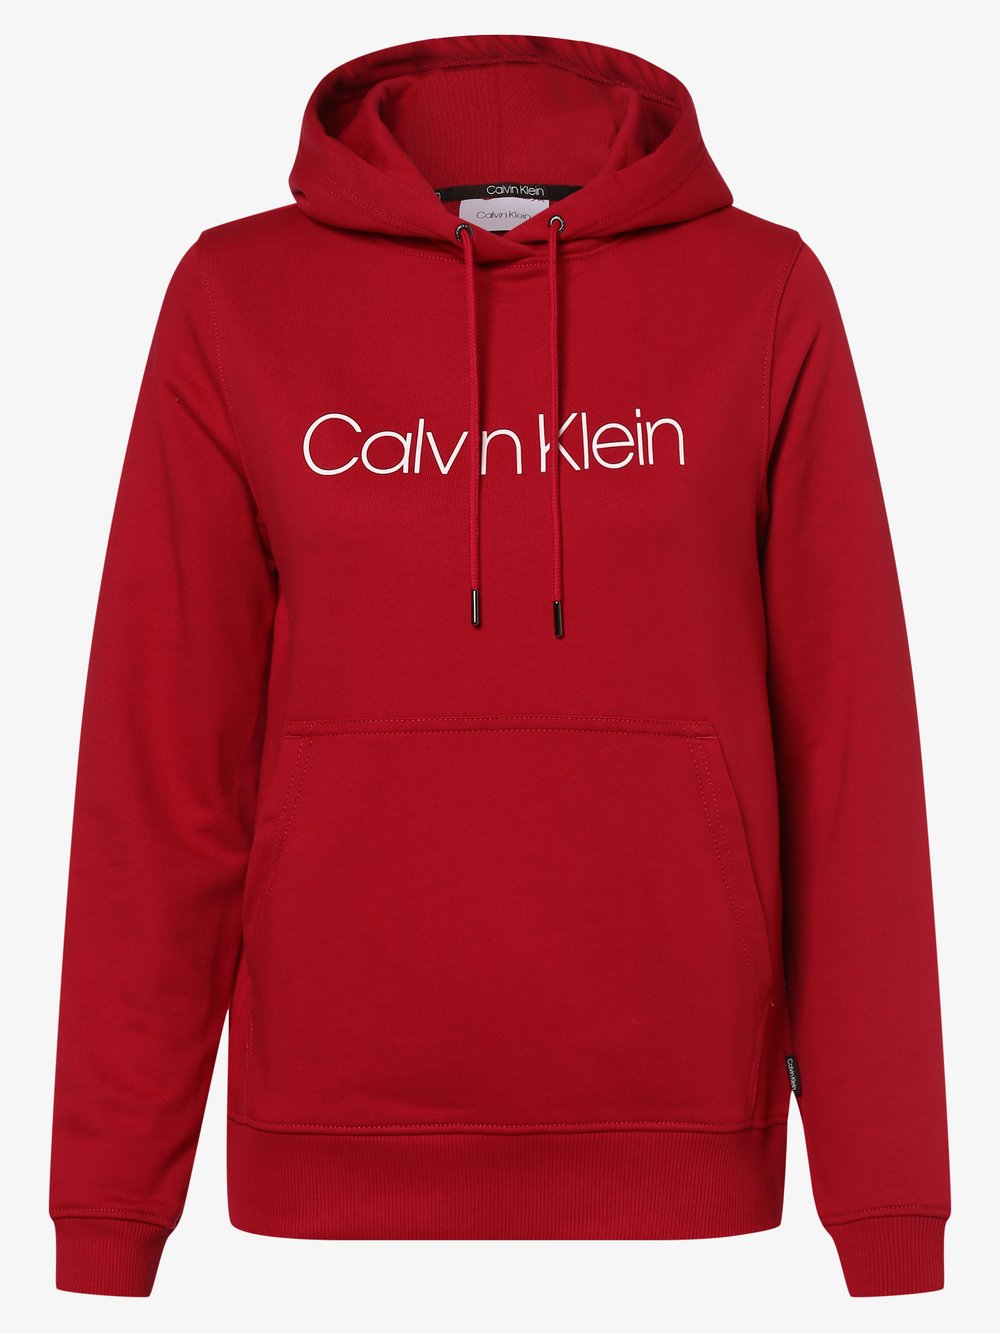 Calvin Klein - Damska bluza z kapturem, wyrazisty róż